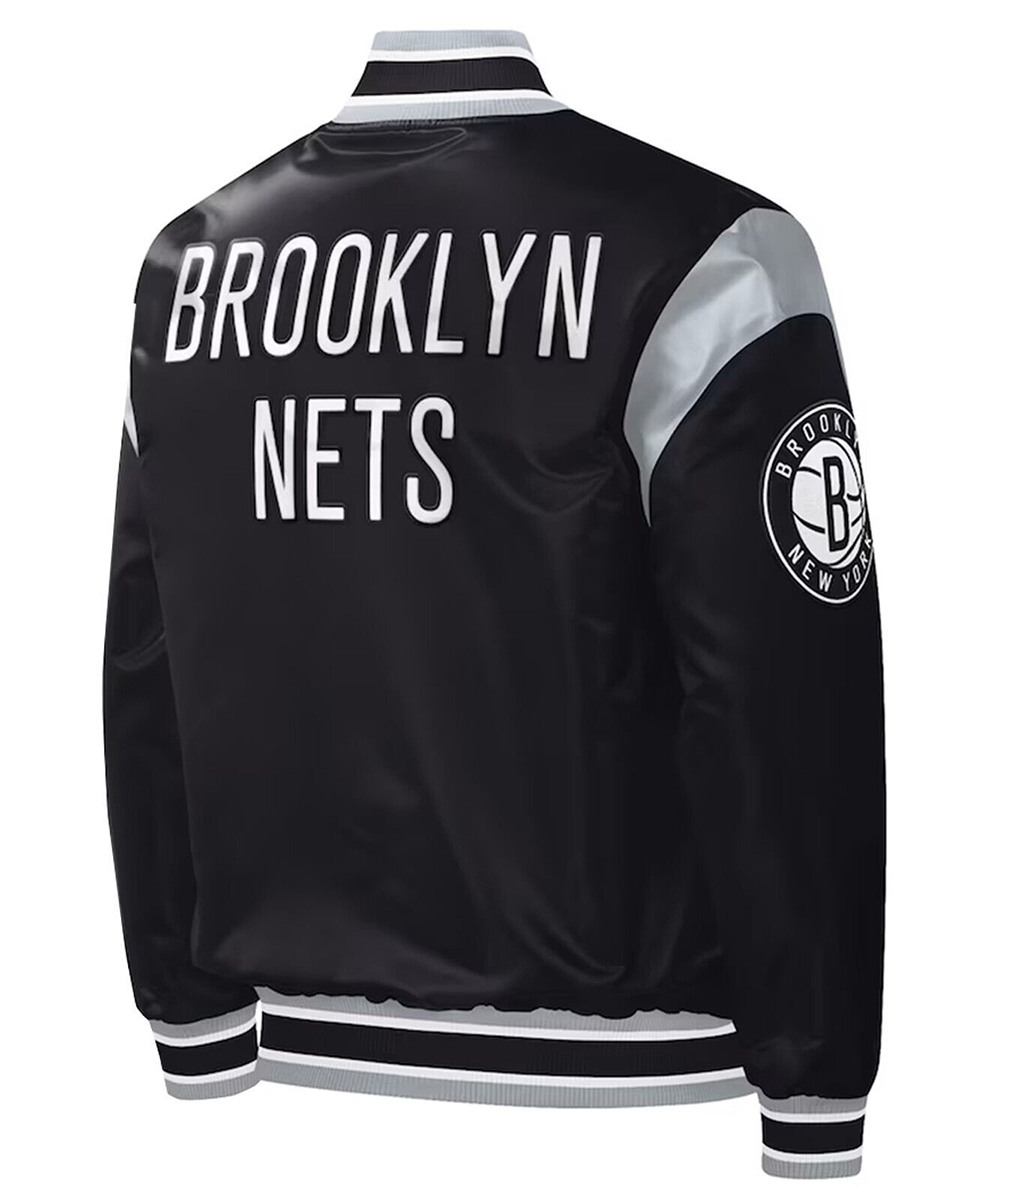 B Nets Baseball Black Varsity Jacket (2)